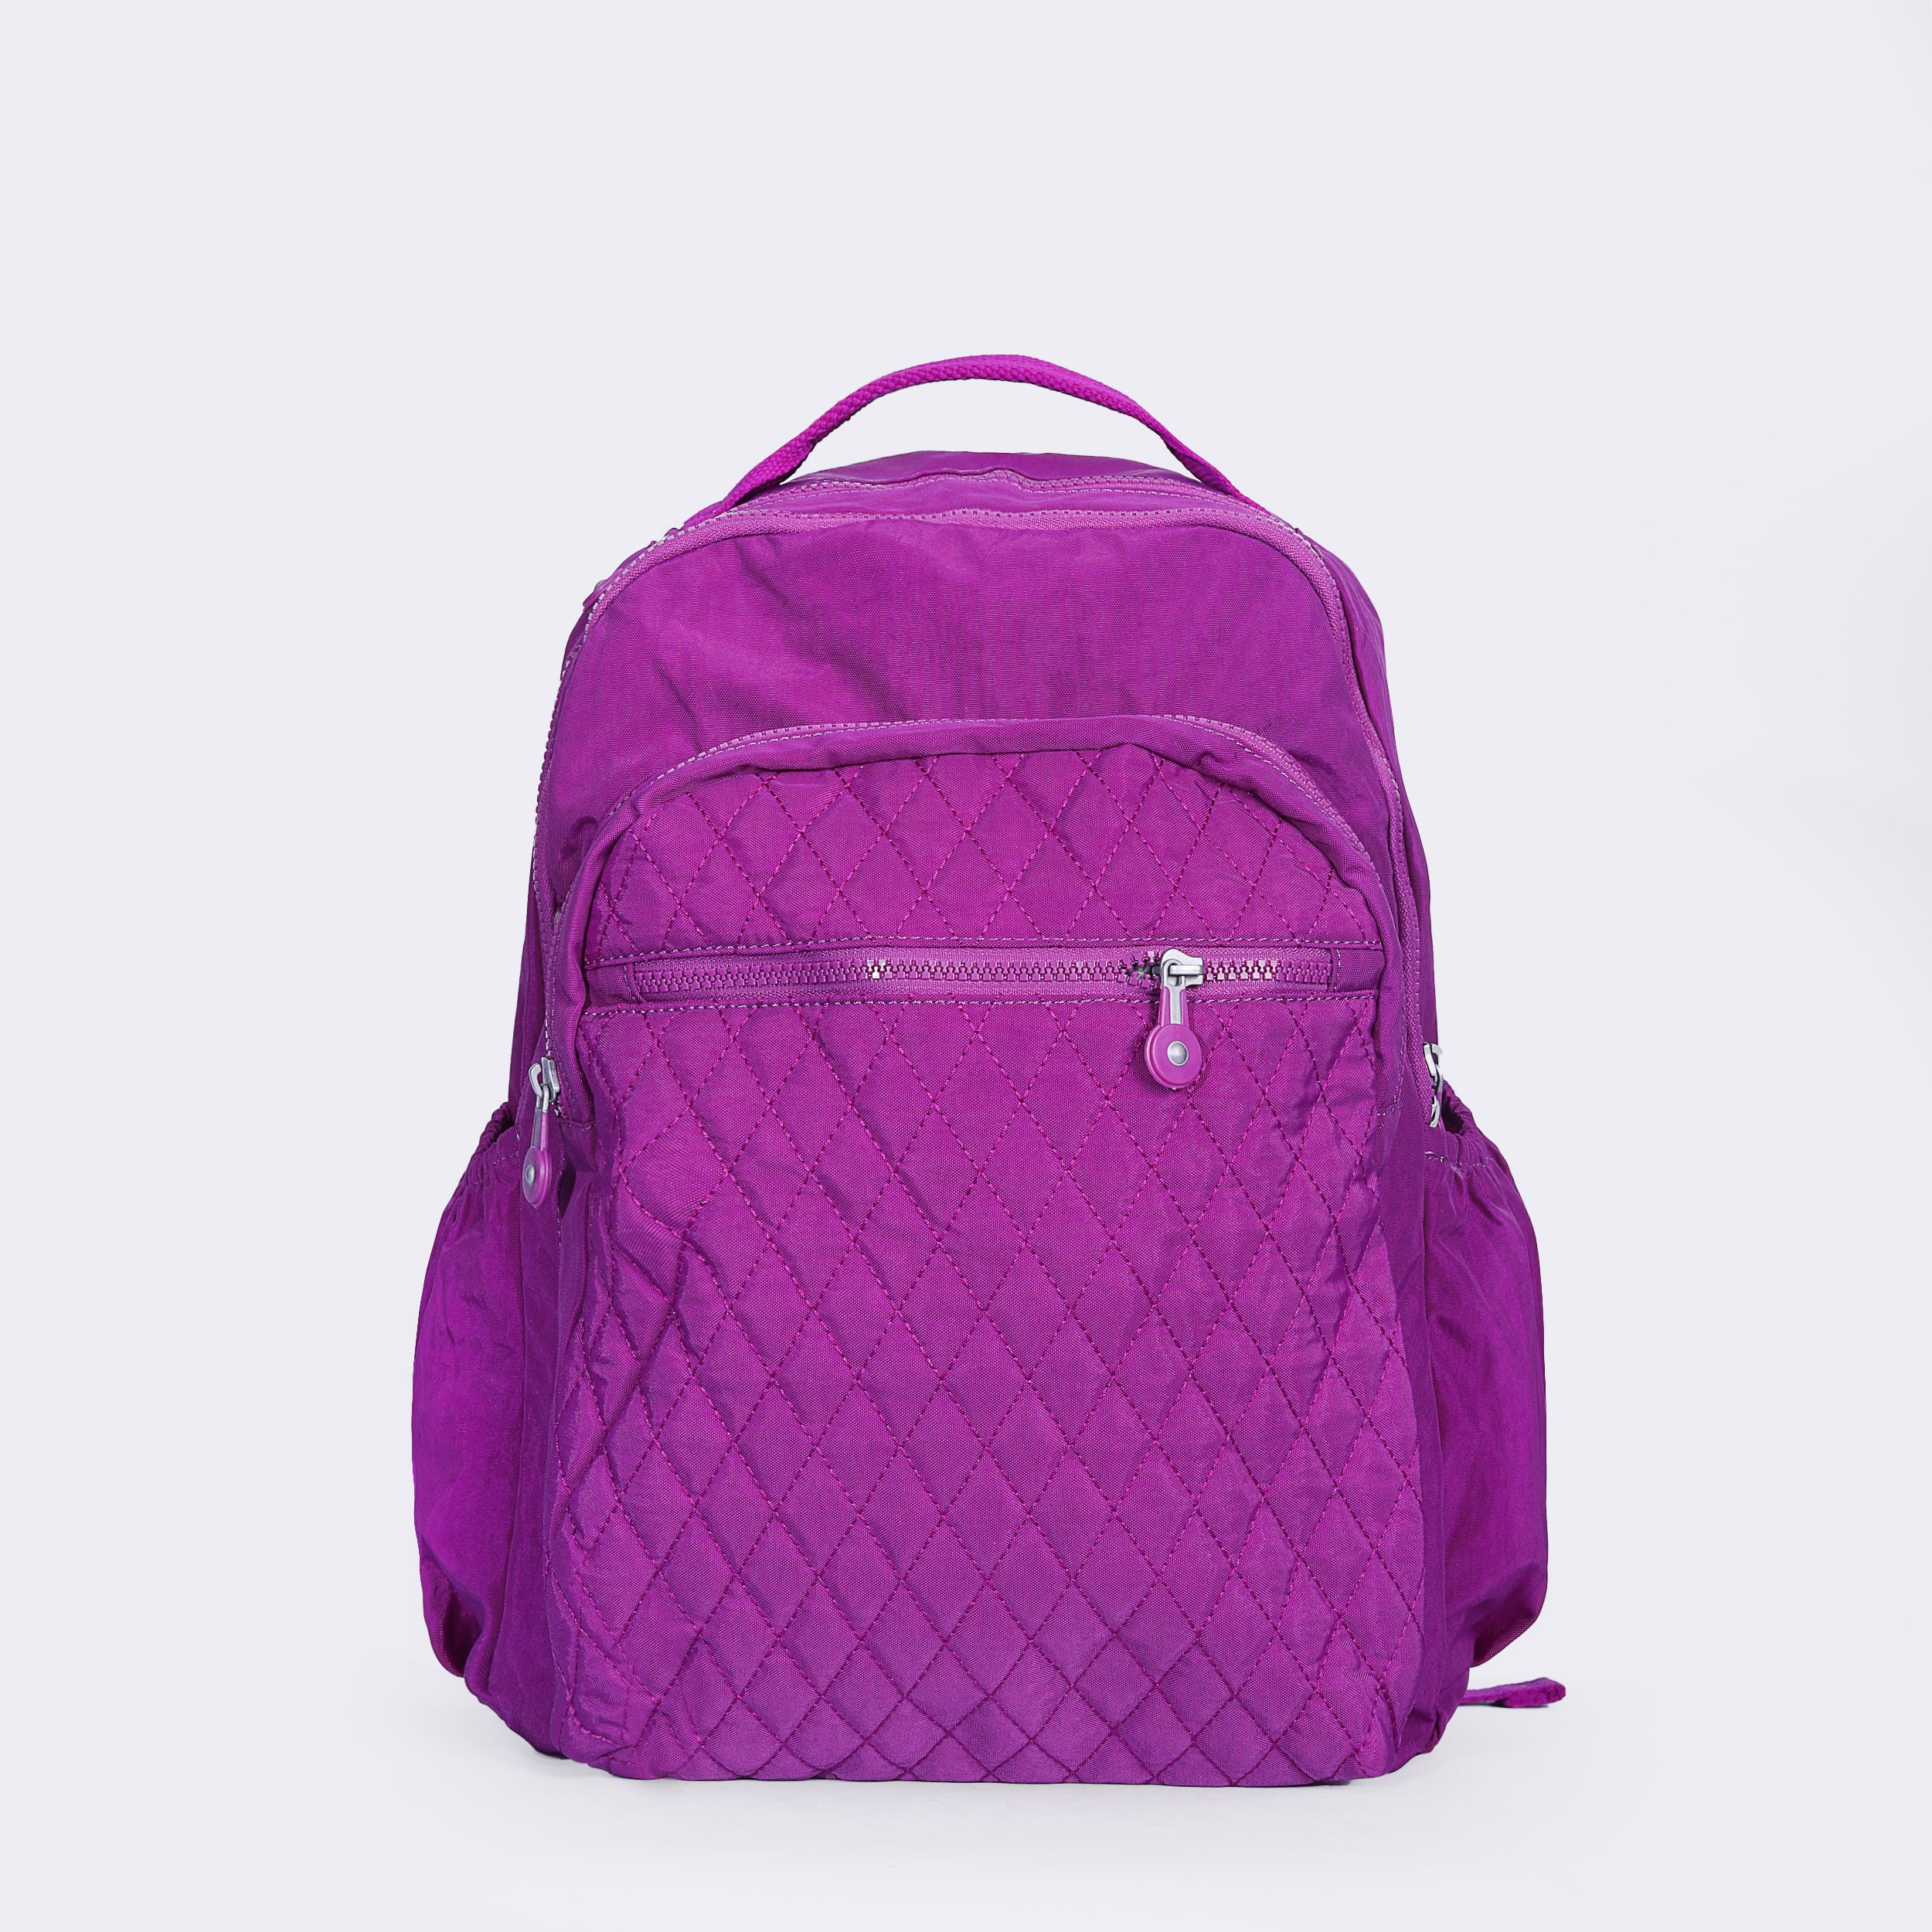 Basic II School Bag For Teens 18 INCH